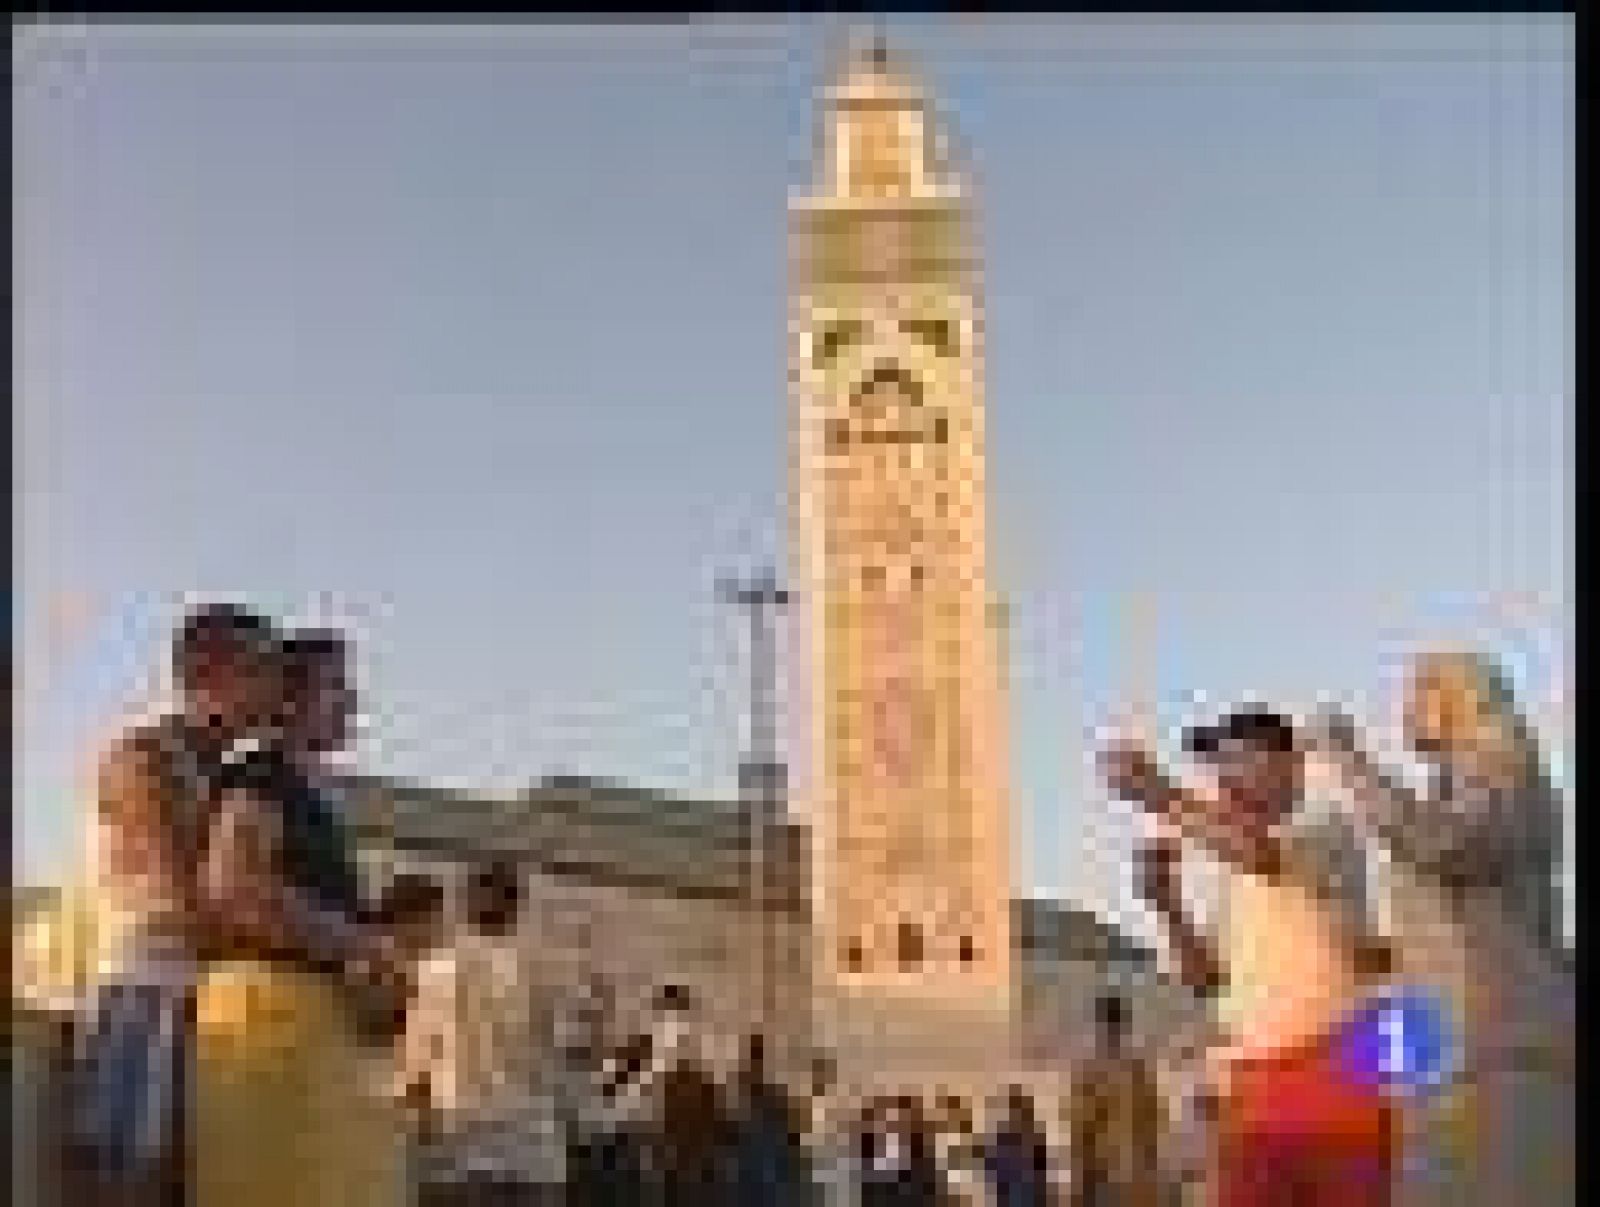 Marruecos ha expulsado a cuatro religiosas españolas acusadas de proselitismo. 